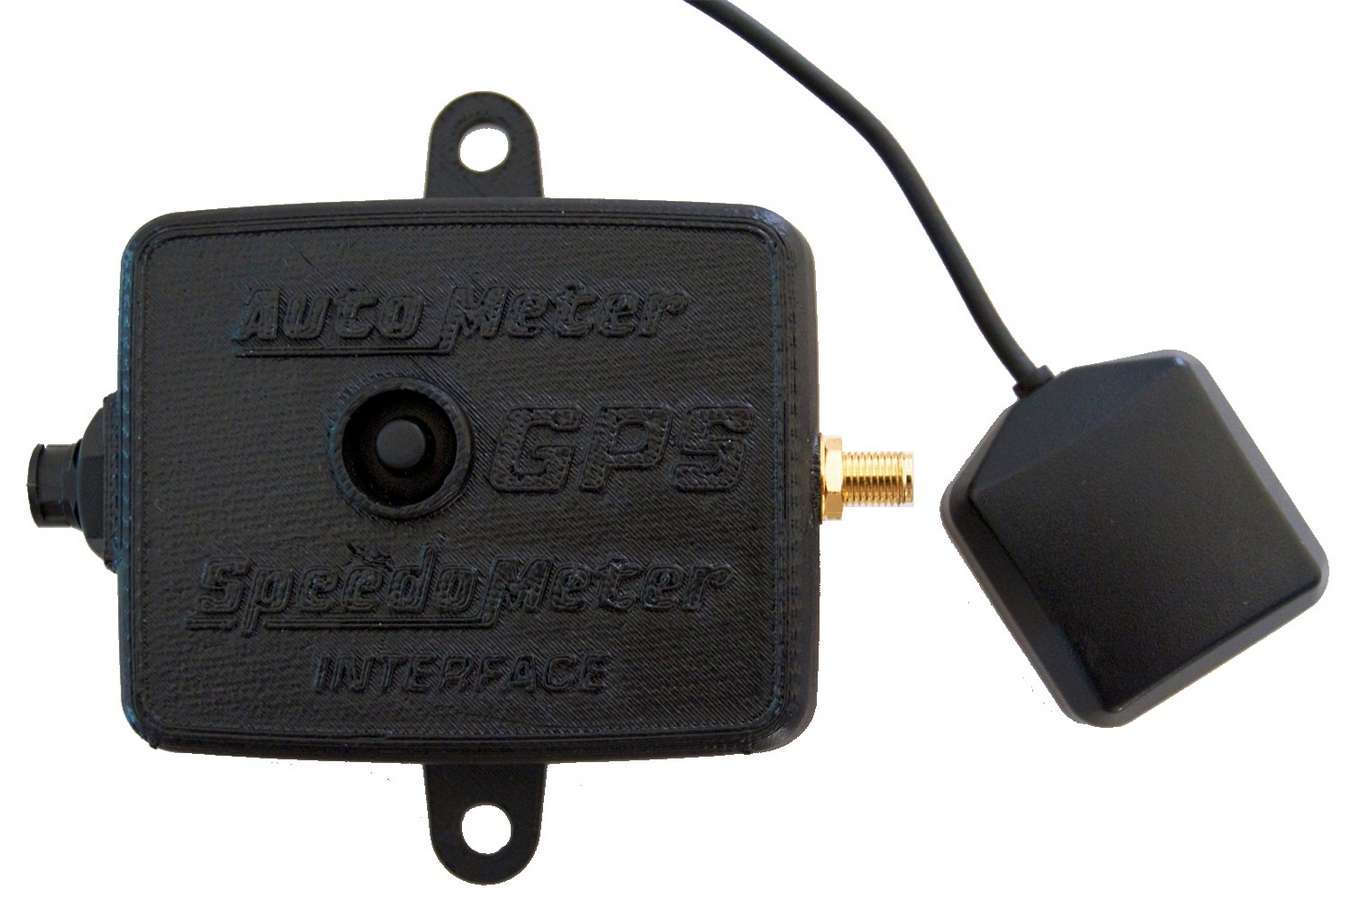 Auto Meter 5289 Speedometer Sending Unit, GPS Tracking, Autometer GPS Enabled Speedometers, Each